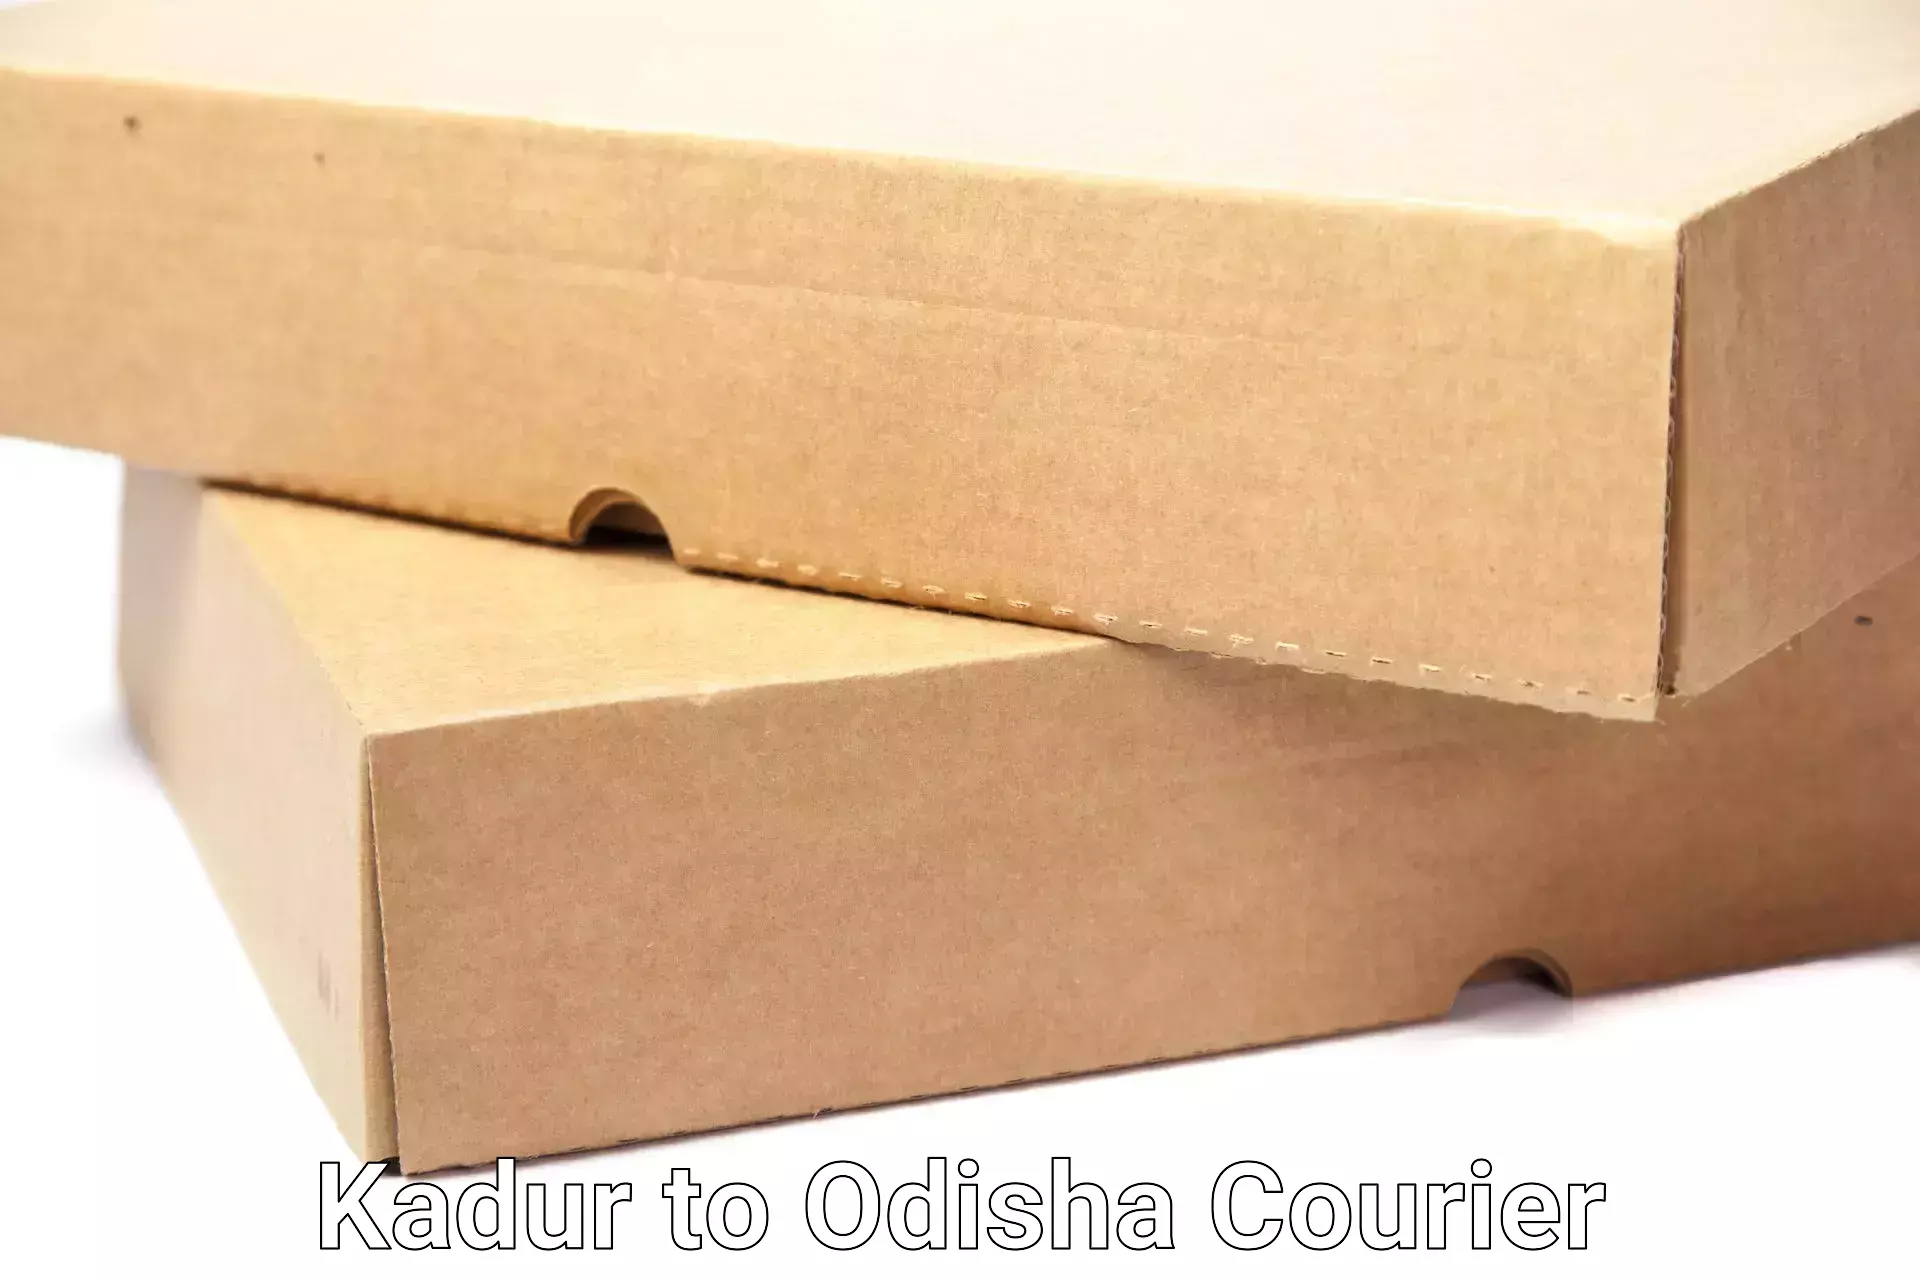 Efficient moving company Kadur to Rayagada